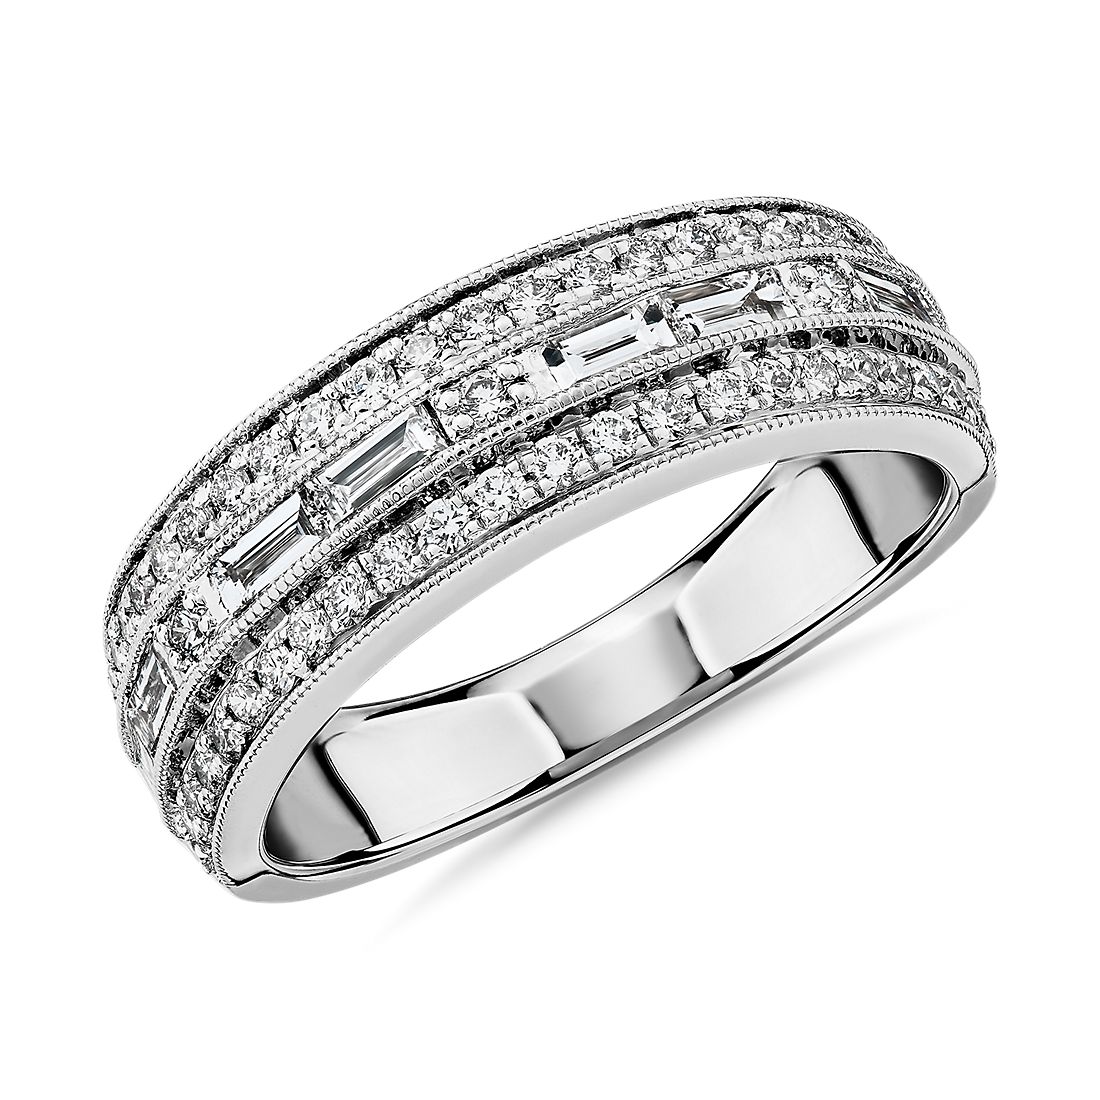 ZAC ZAC POSEN Triple Row East-West Baguette & Pavé Diamond Wedding Ring in 14k White Gold (6 mm, 3/4 ct. tw.)